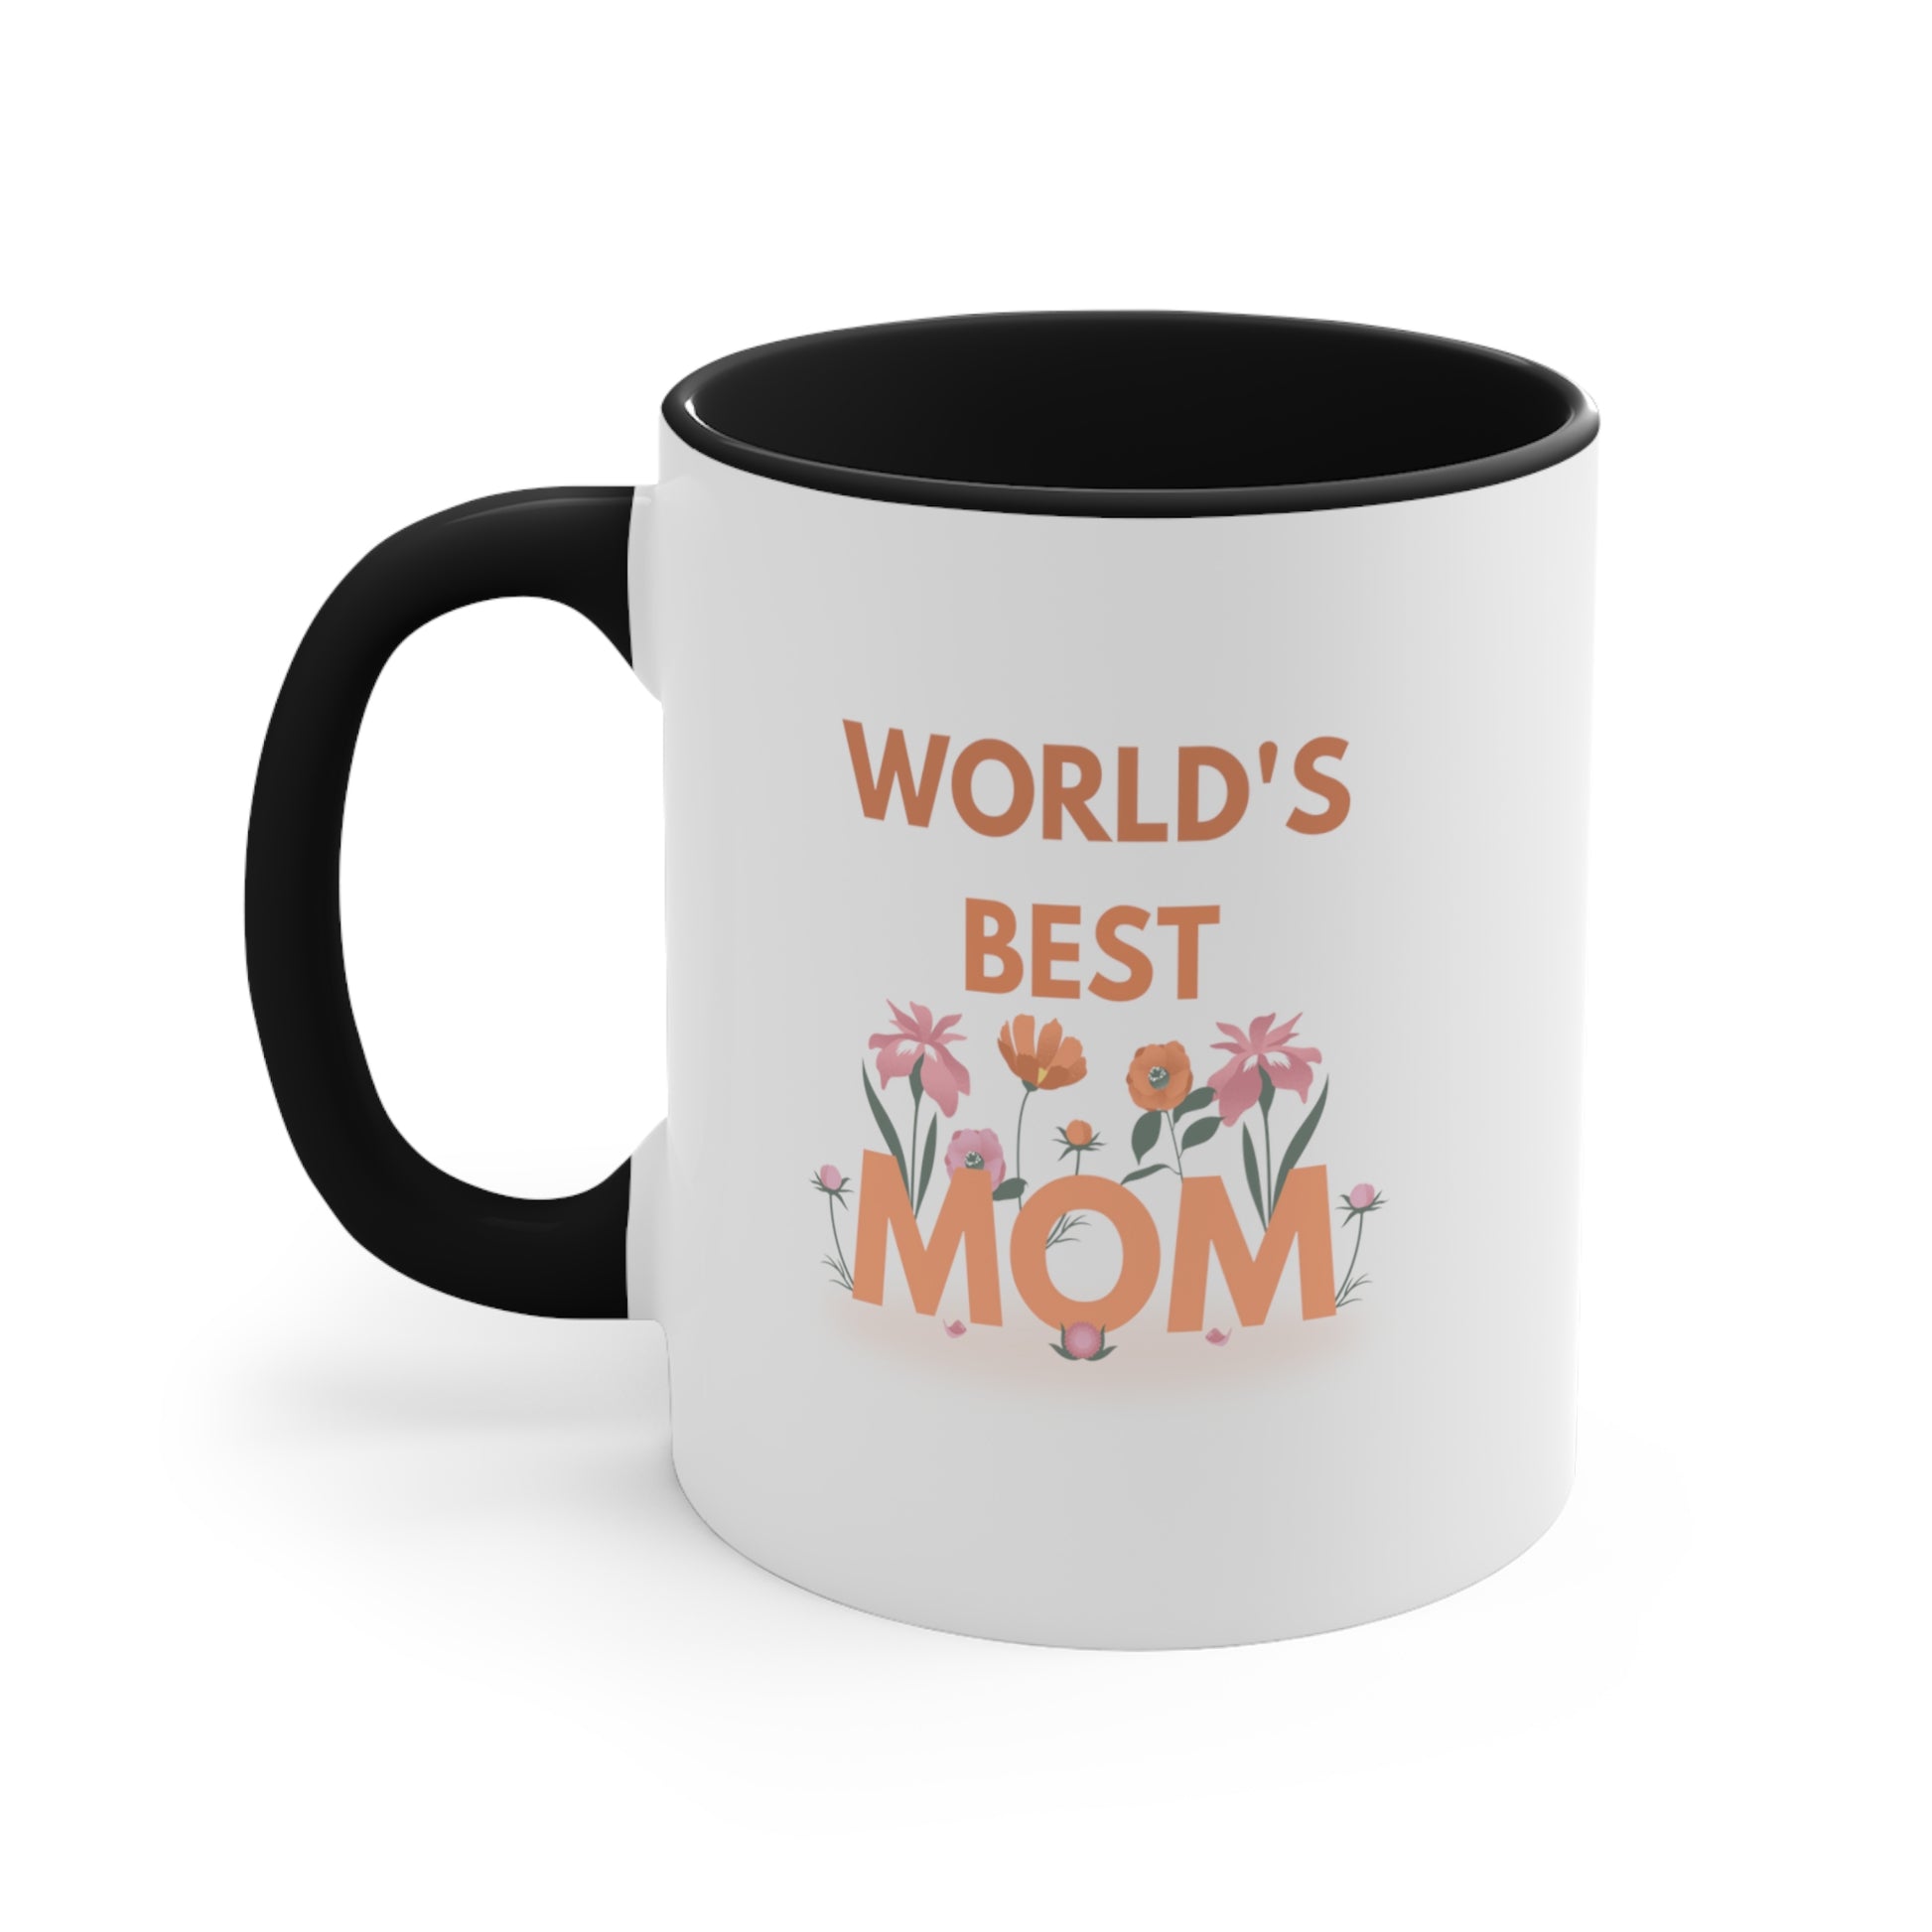 world's best mom mug